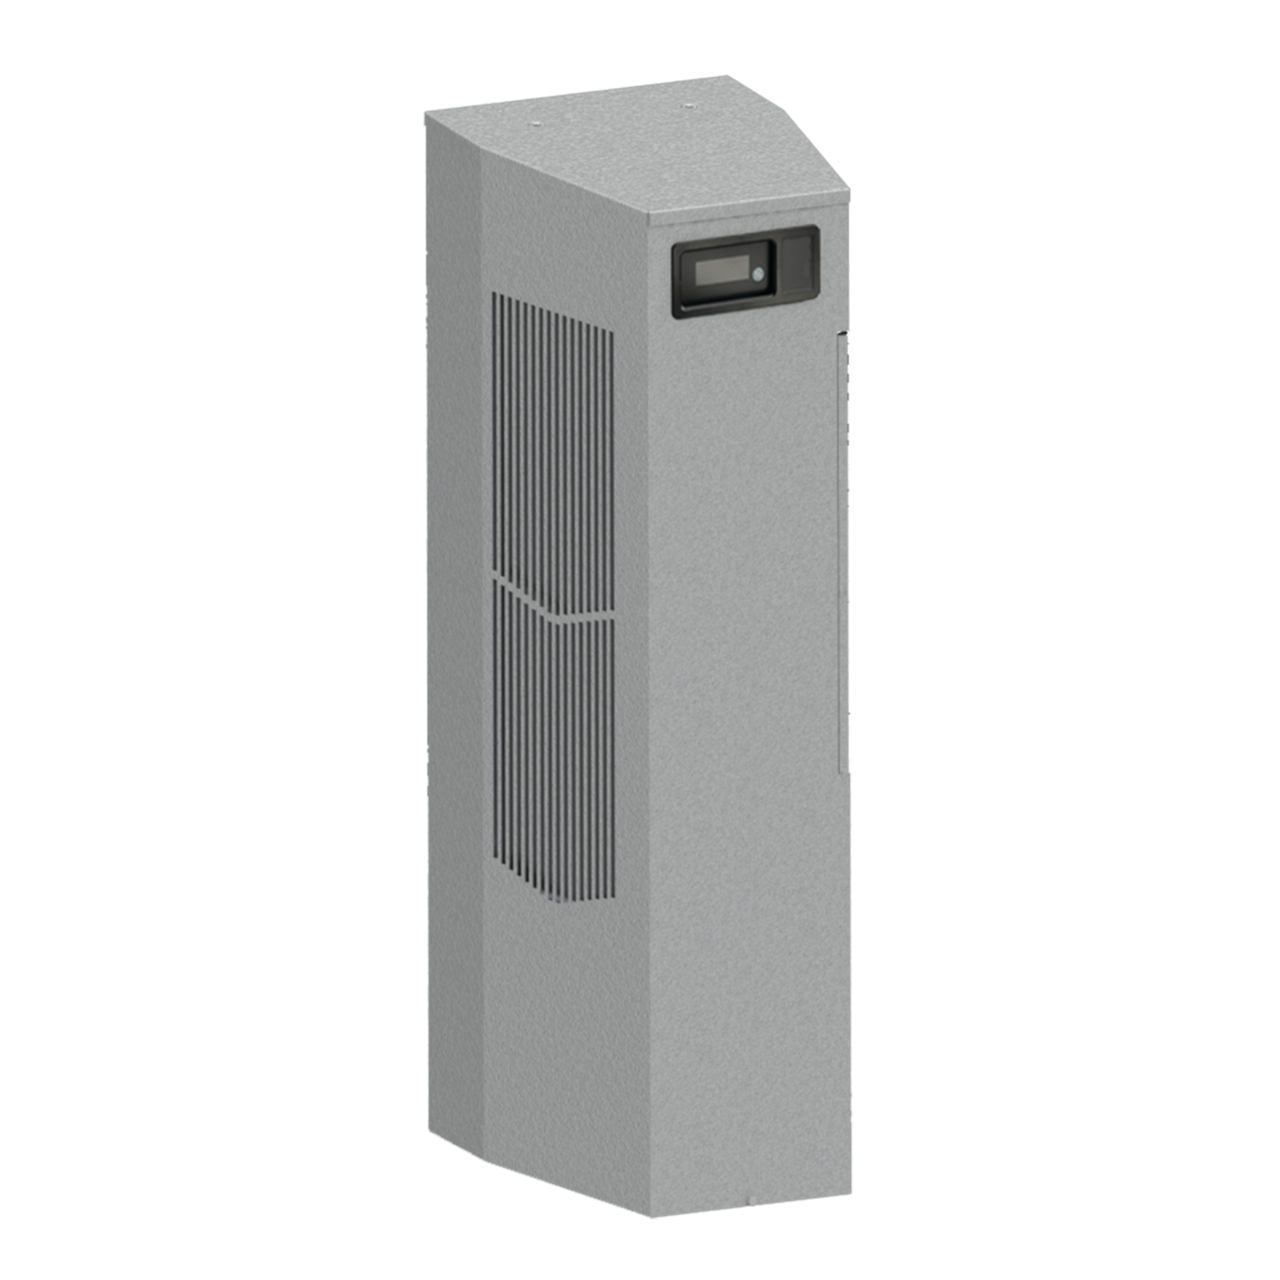 nVent HOFFMAN Spectracool™ N360816G100 MCL Indoor/Outdoor Enclosure Air Conditioner, 115 VAC, 11.6/13.3 A, 50/60 Hz, NEMA 3R/4/12 Enclosure, 7800 Btu/hr